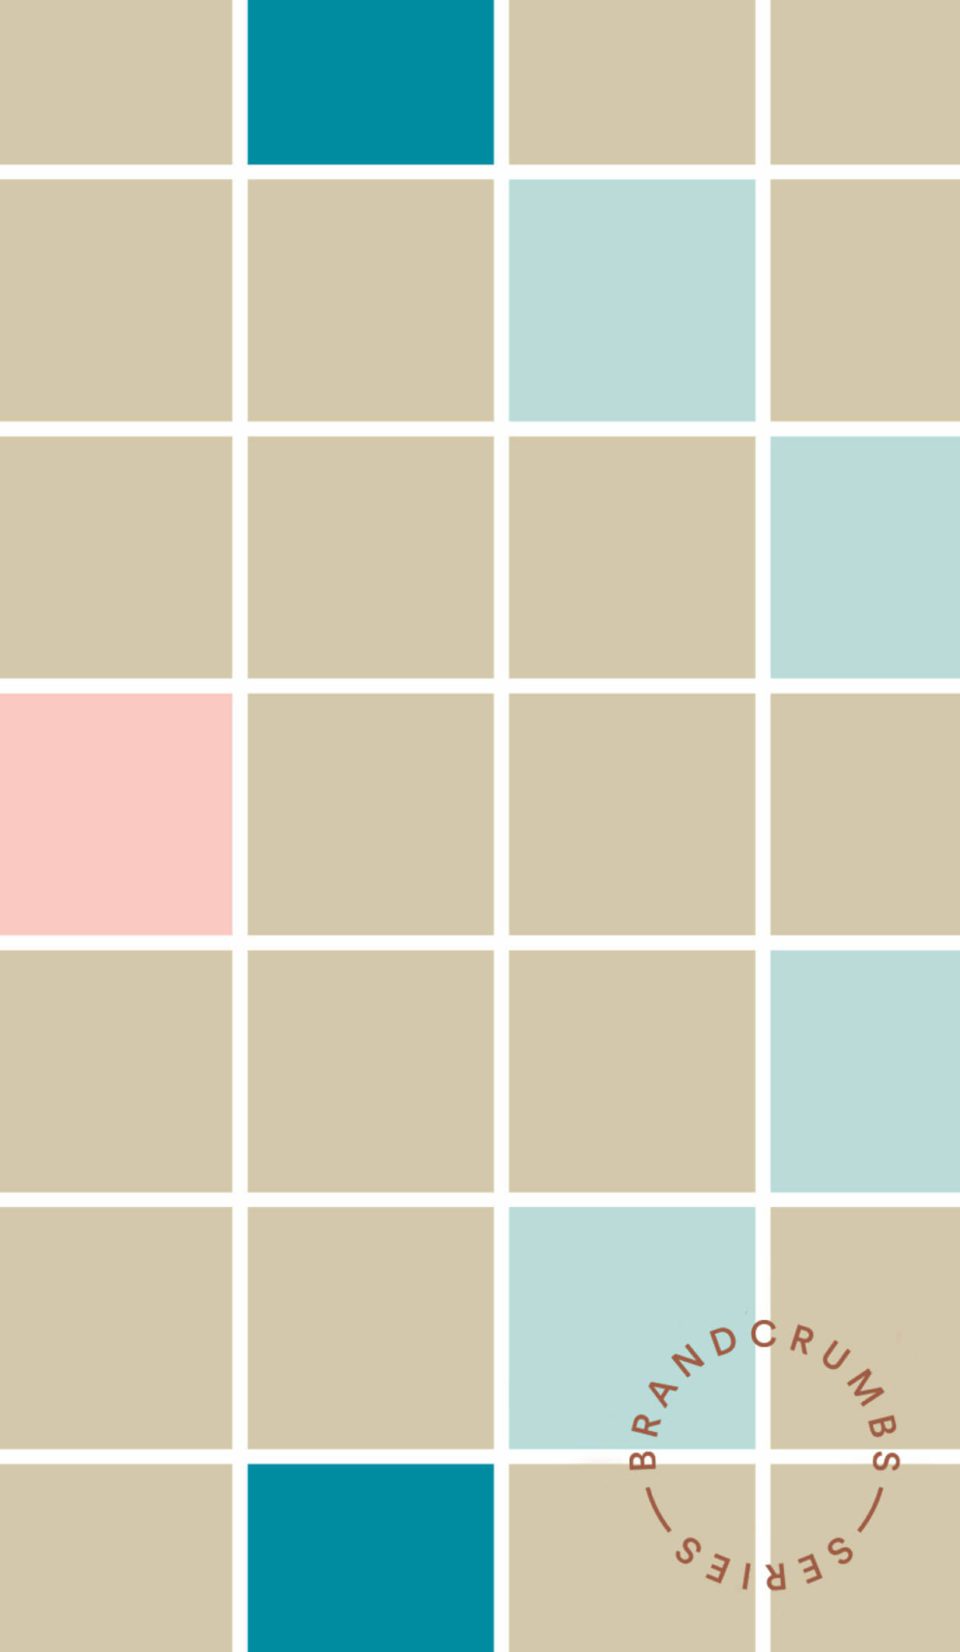 grid of color blocks